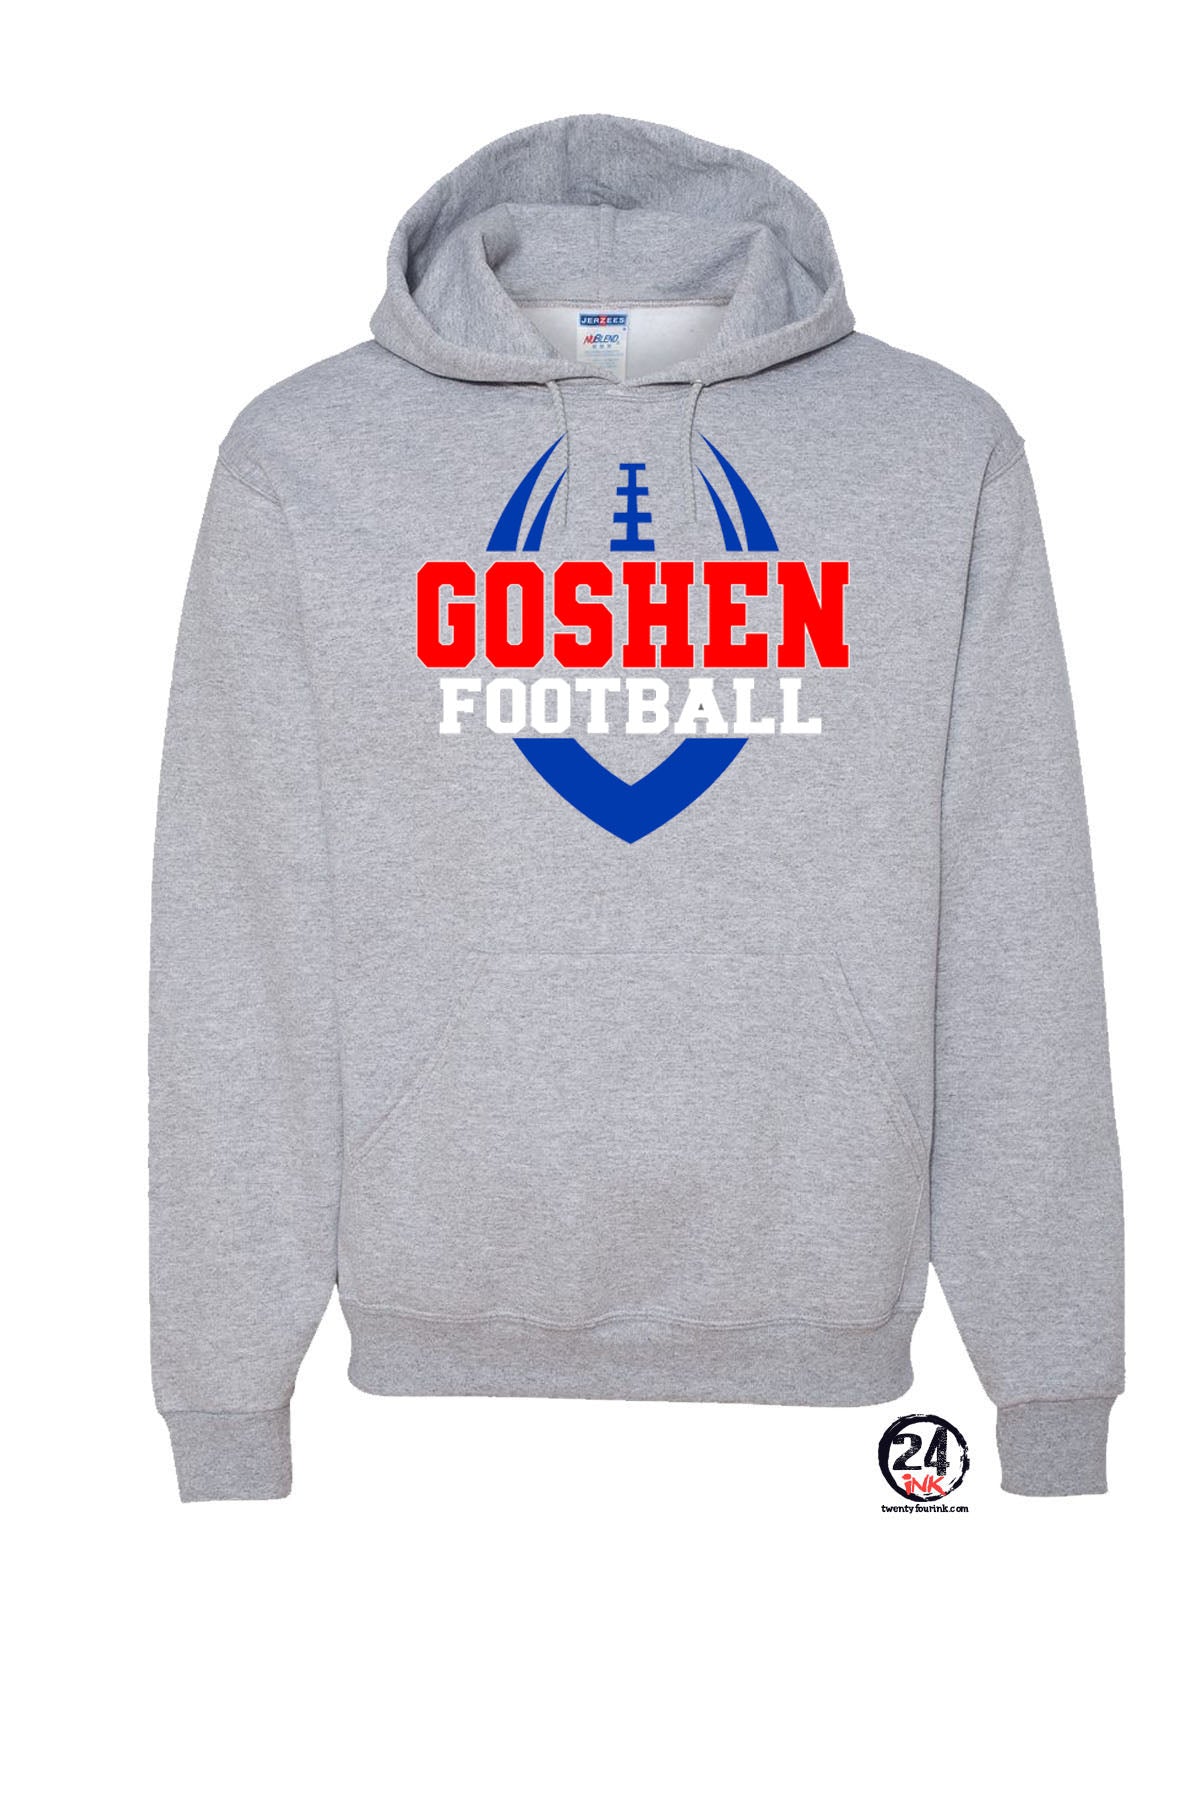 Goshen Football Design 1 Hooded Sweatshirt